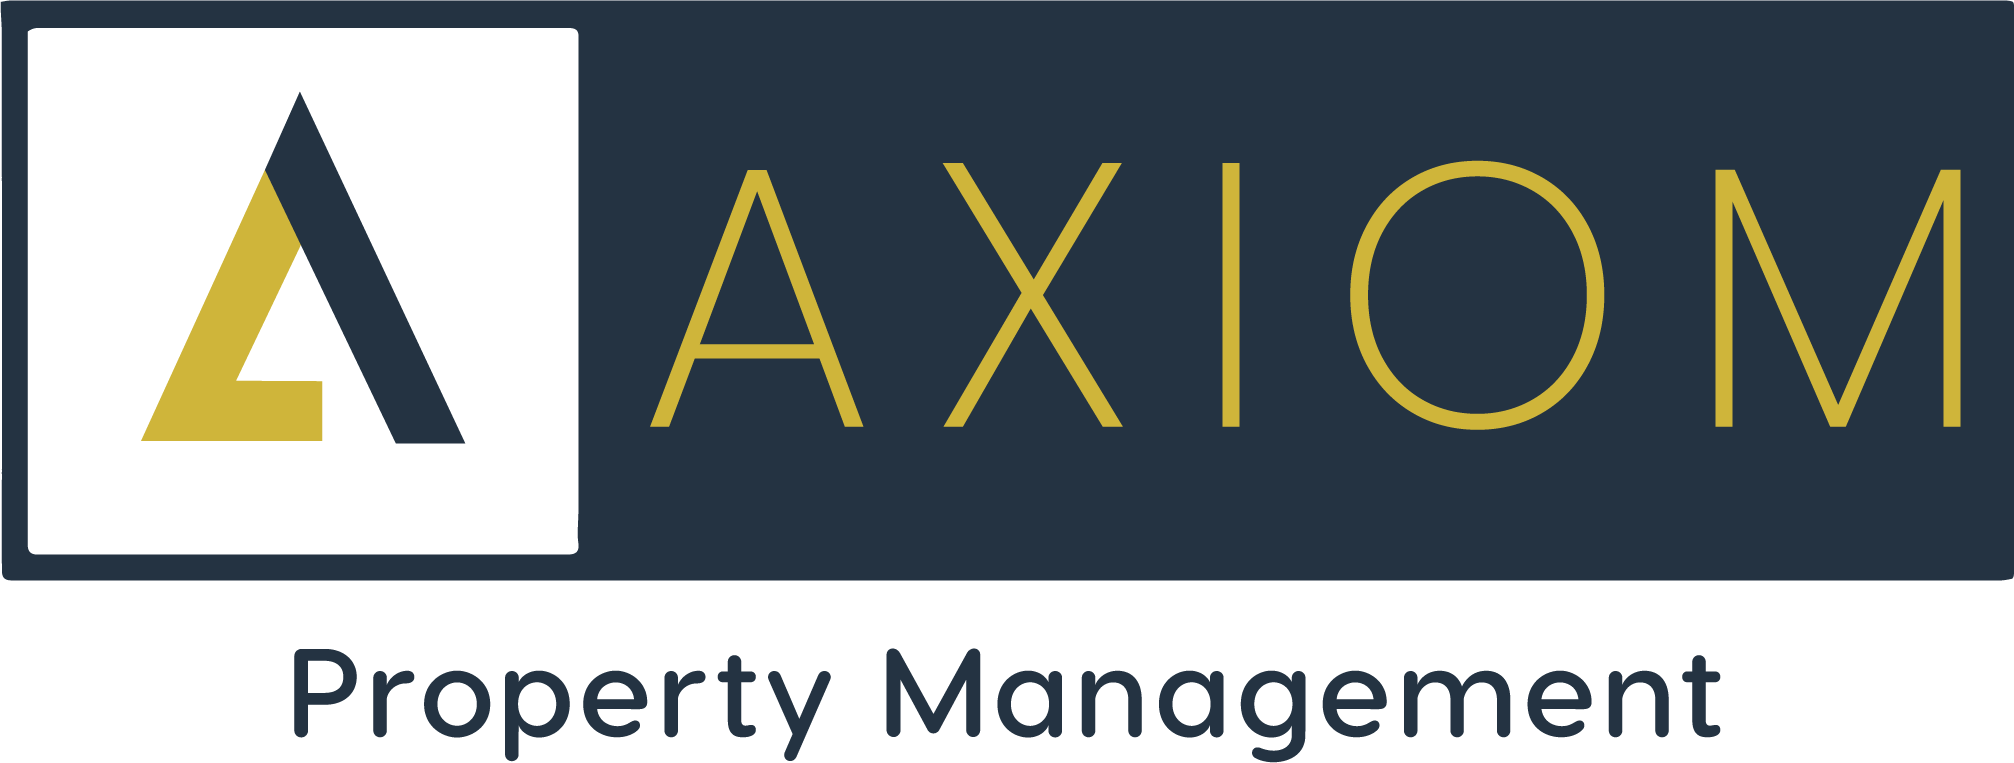 Axiom Property Management Logo